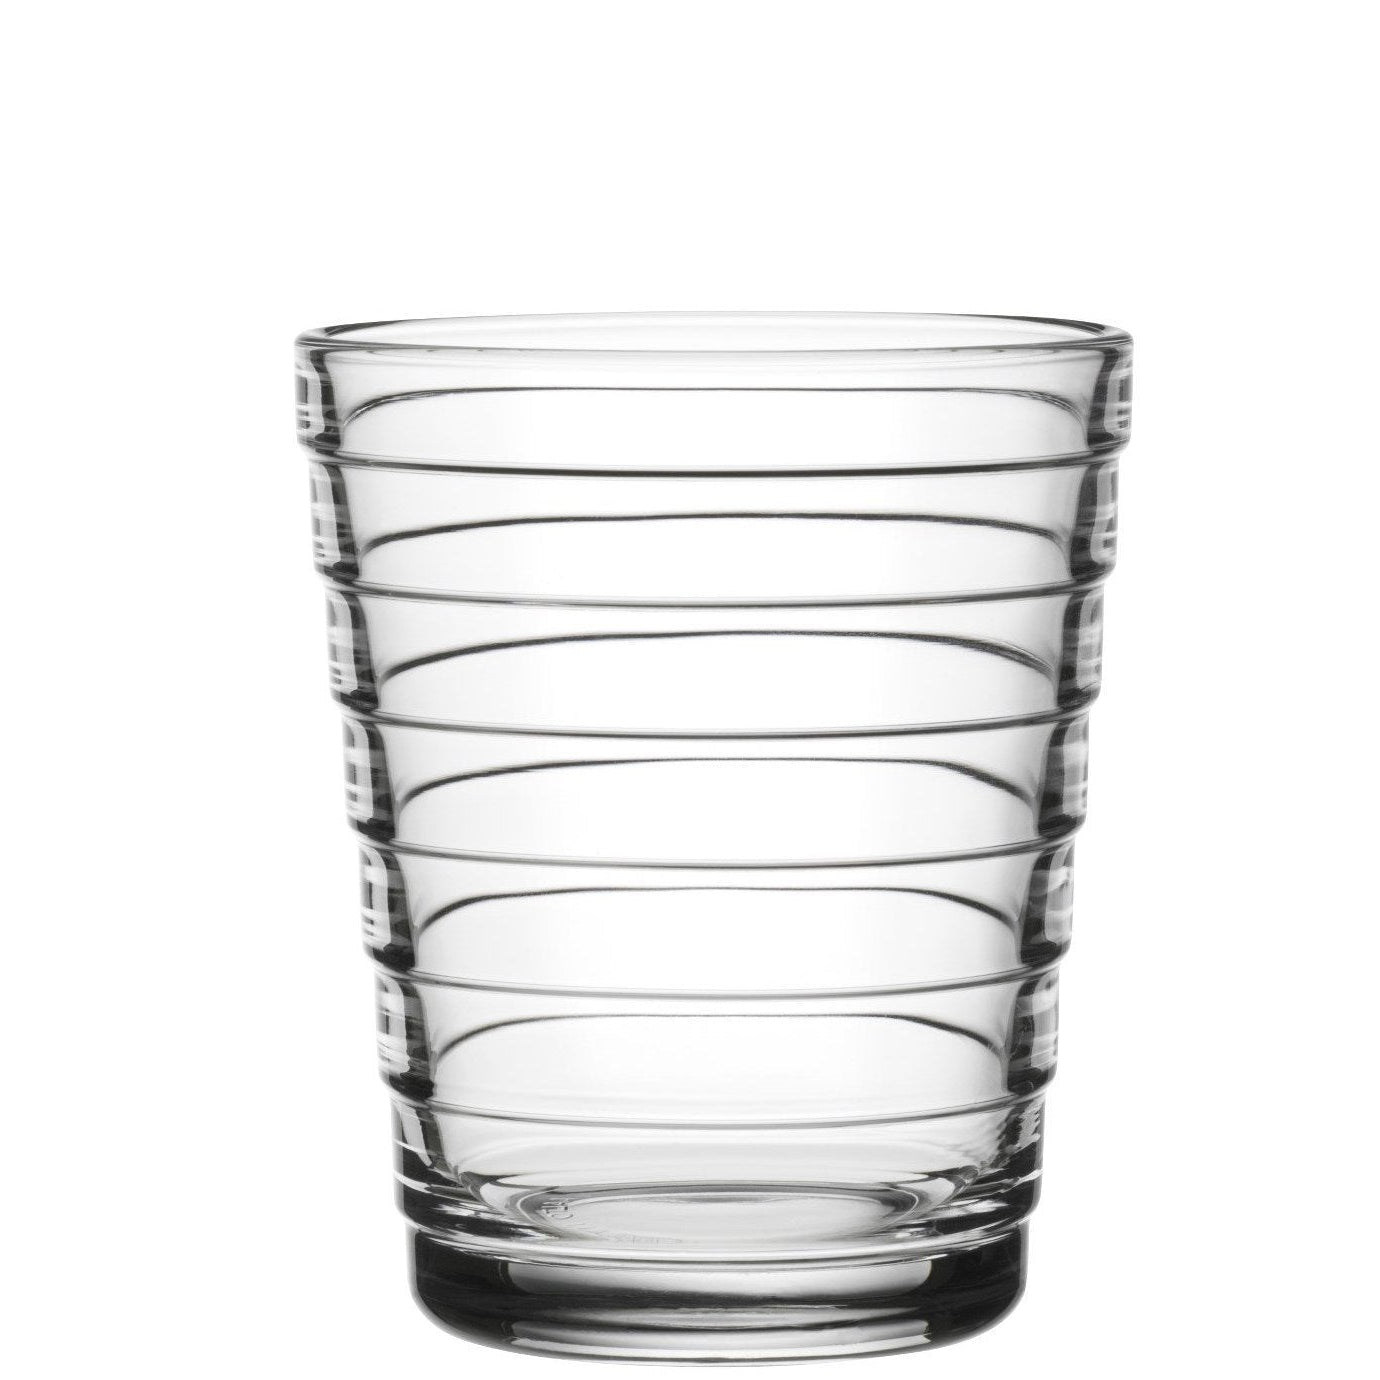 Iittala Aino aalto glass klar 2 stk, 22cl